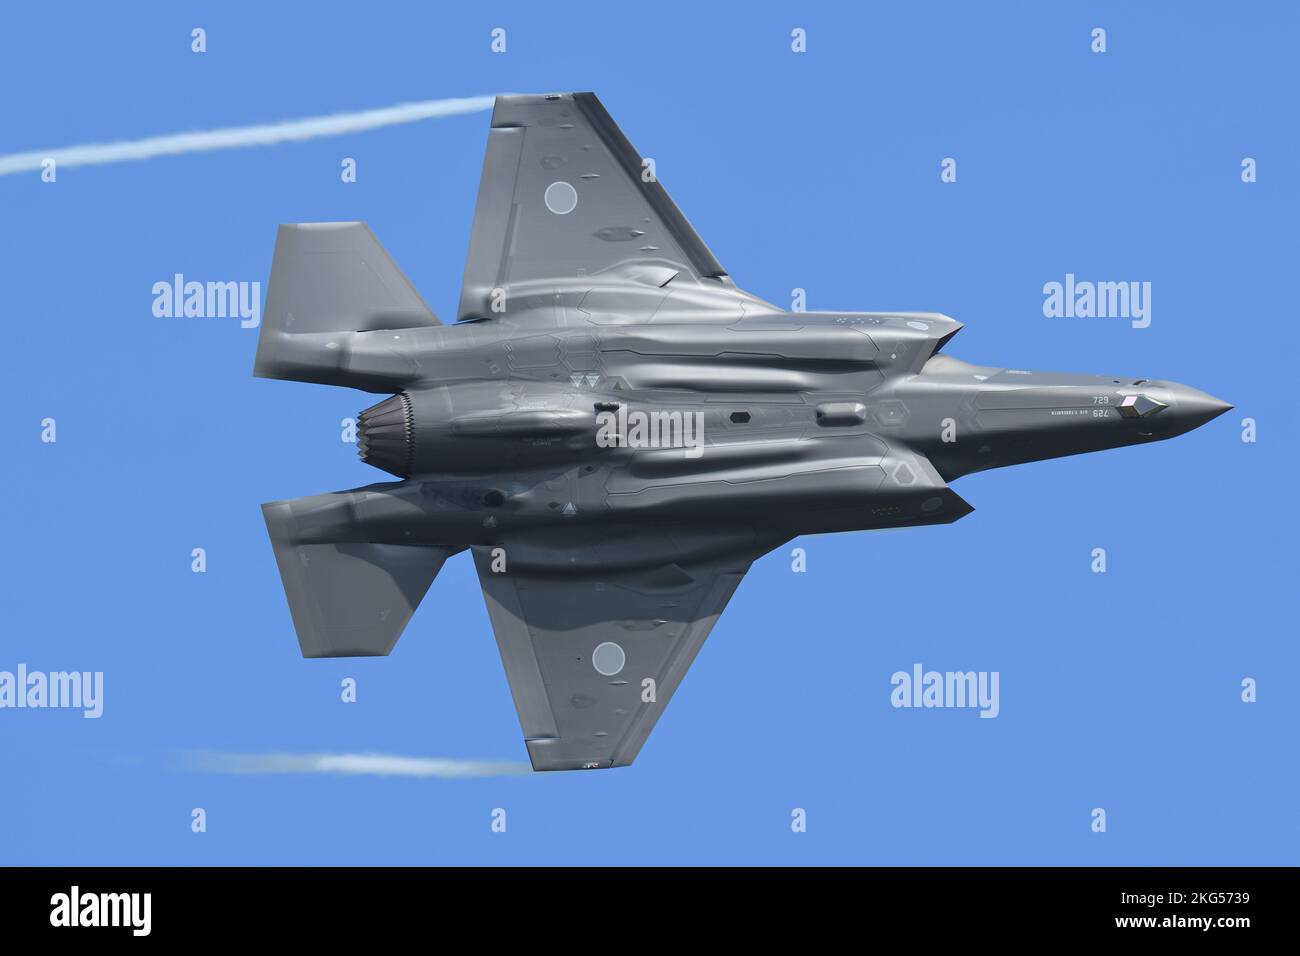 Préfecture d'Aomori, Japon - 11 septembre 2022: Japon Air Self-Defence Force Lockheed Martin F-35A Lightning II furtif multirôle combattant. Banque D'Images